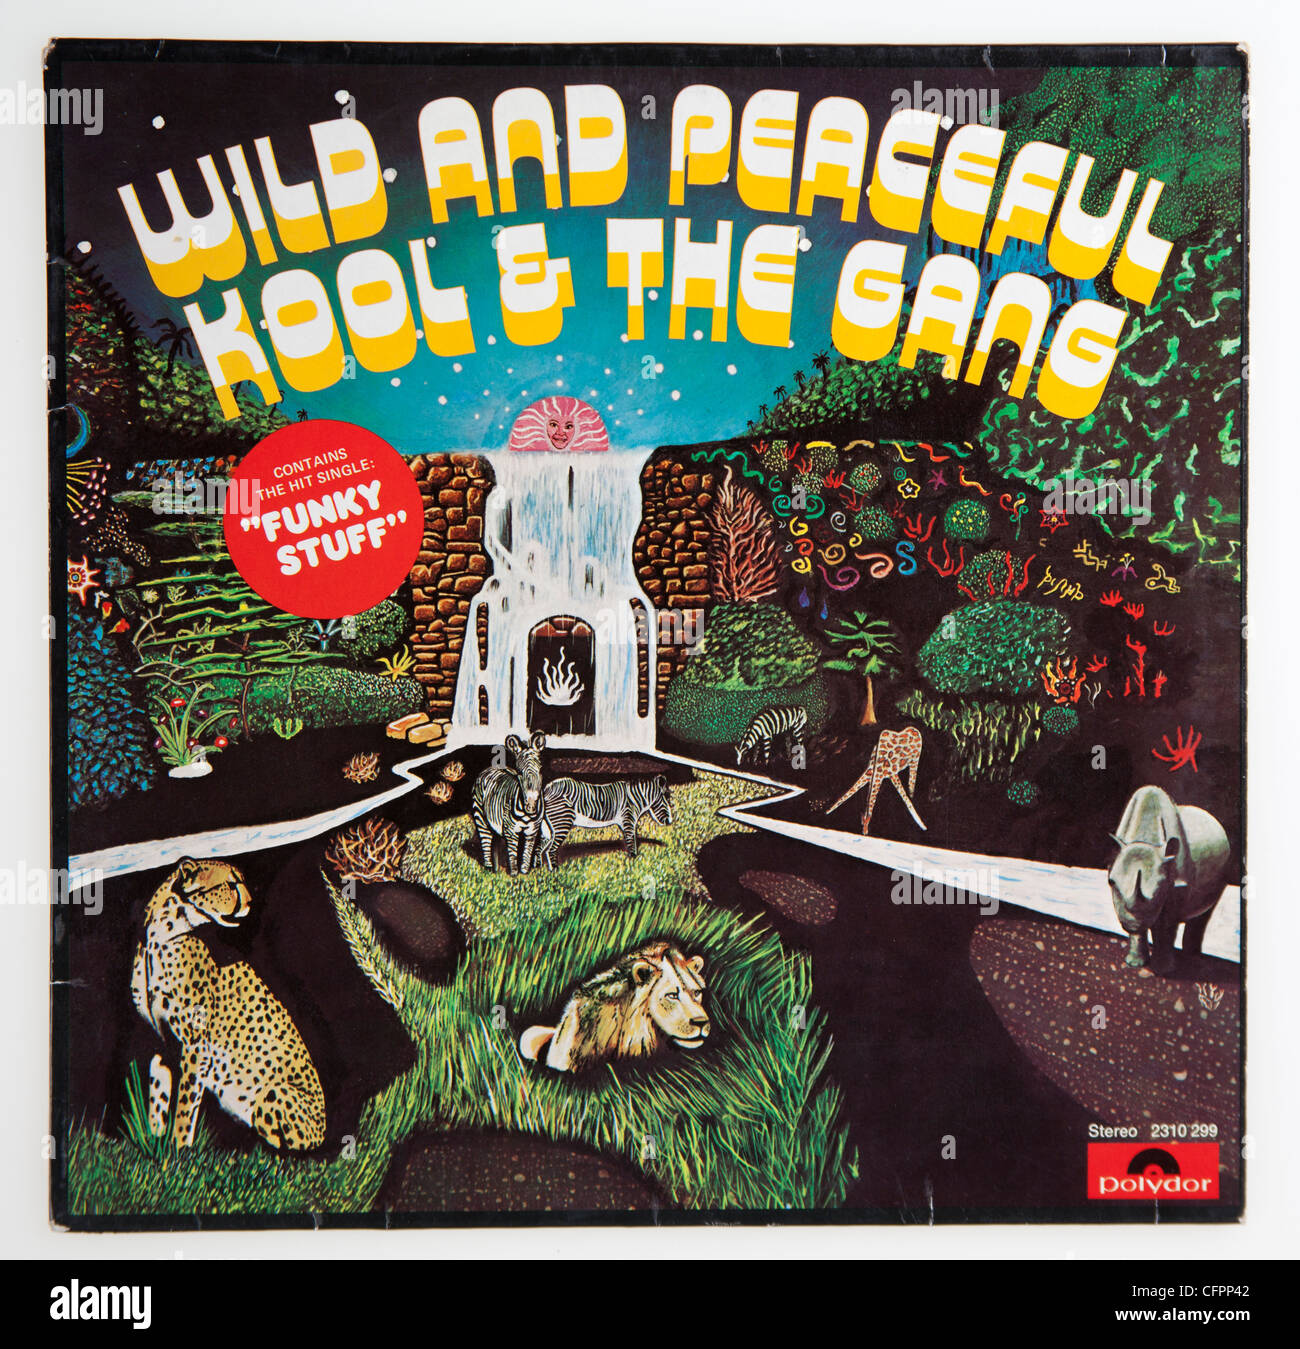 Wild e pacifica, Kool & Gang copertina album Foto Stock